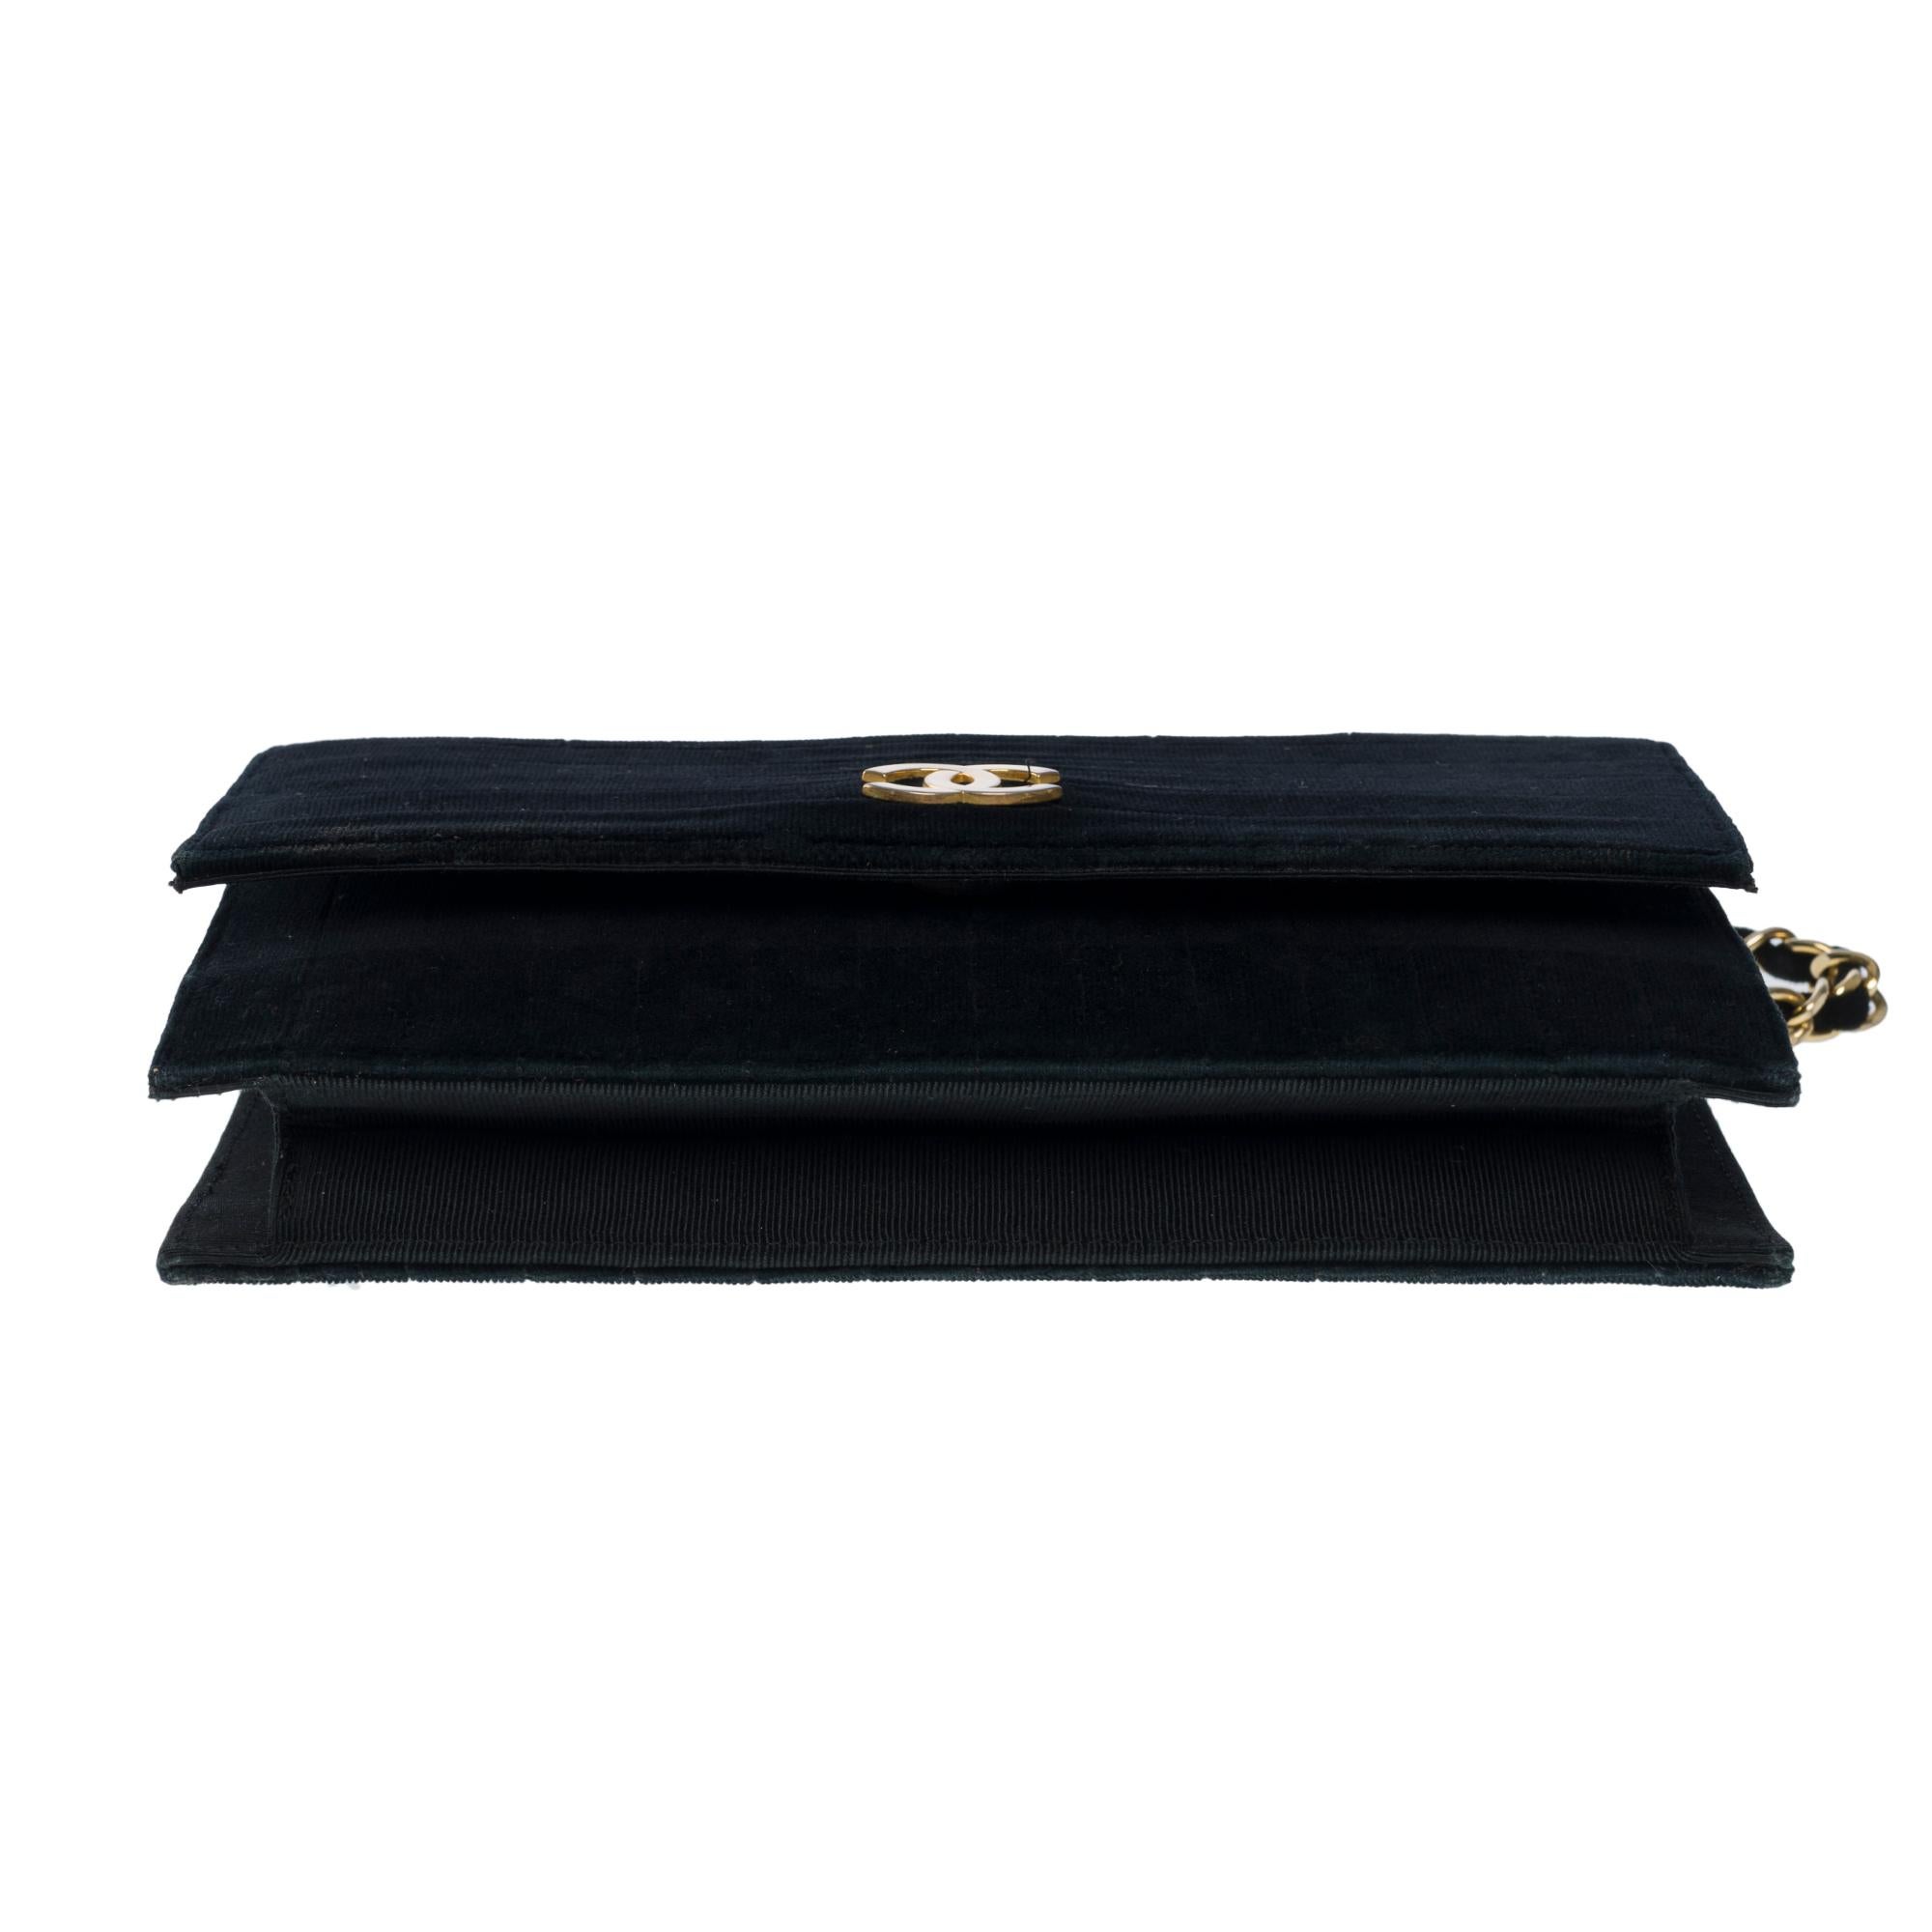 Rare Chanel Classic shoulder flap bag in black velvet, GHW 5